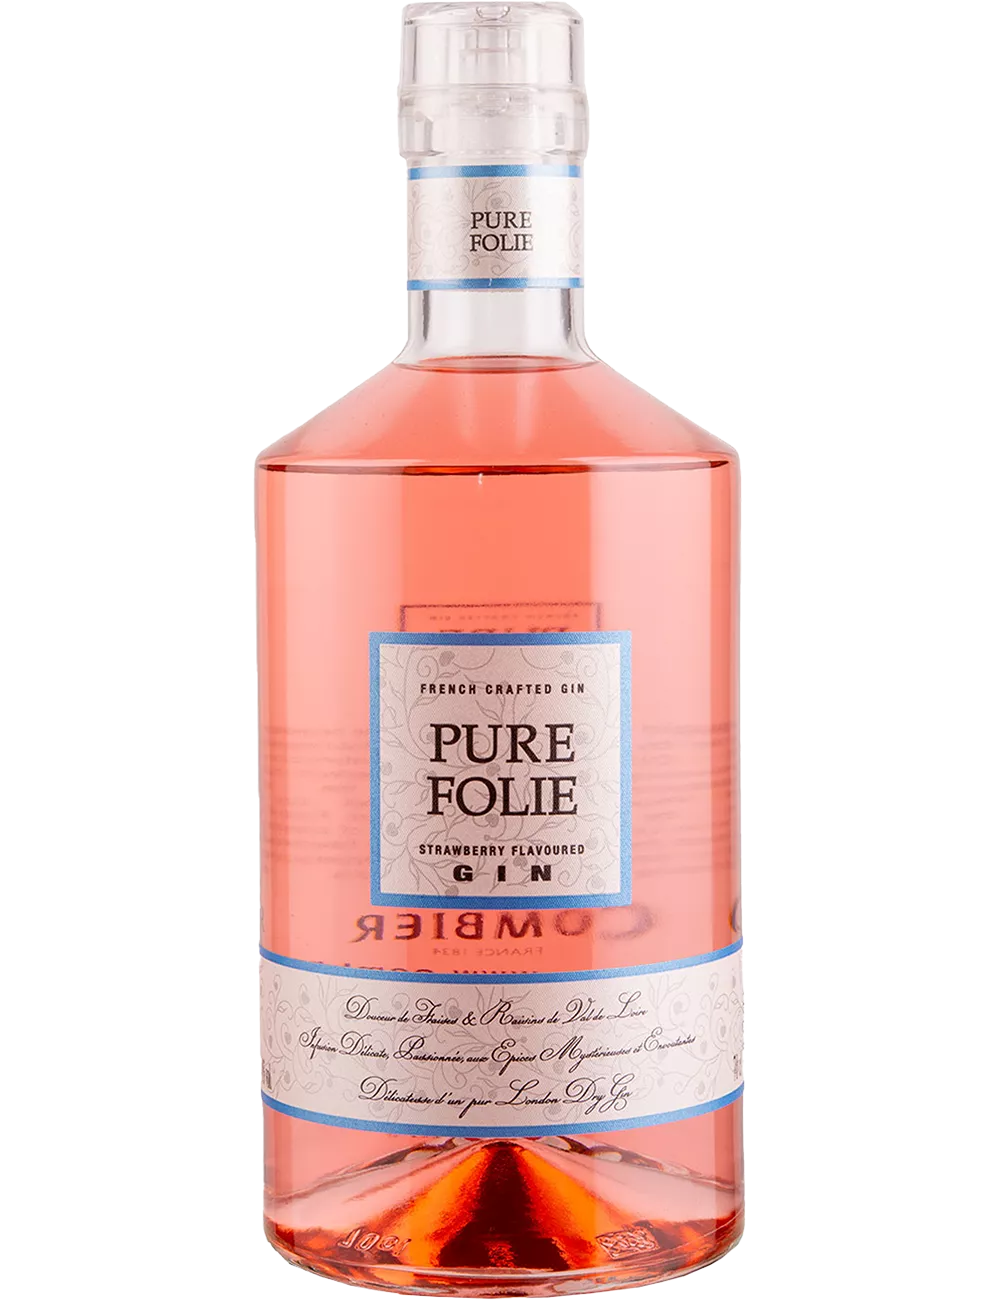 Pure Folie - Distilled gin